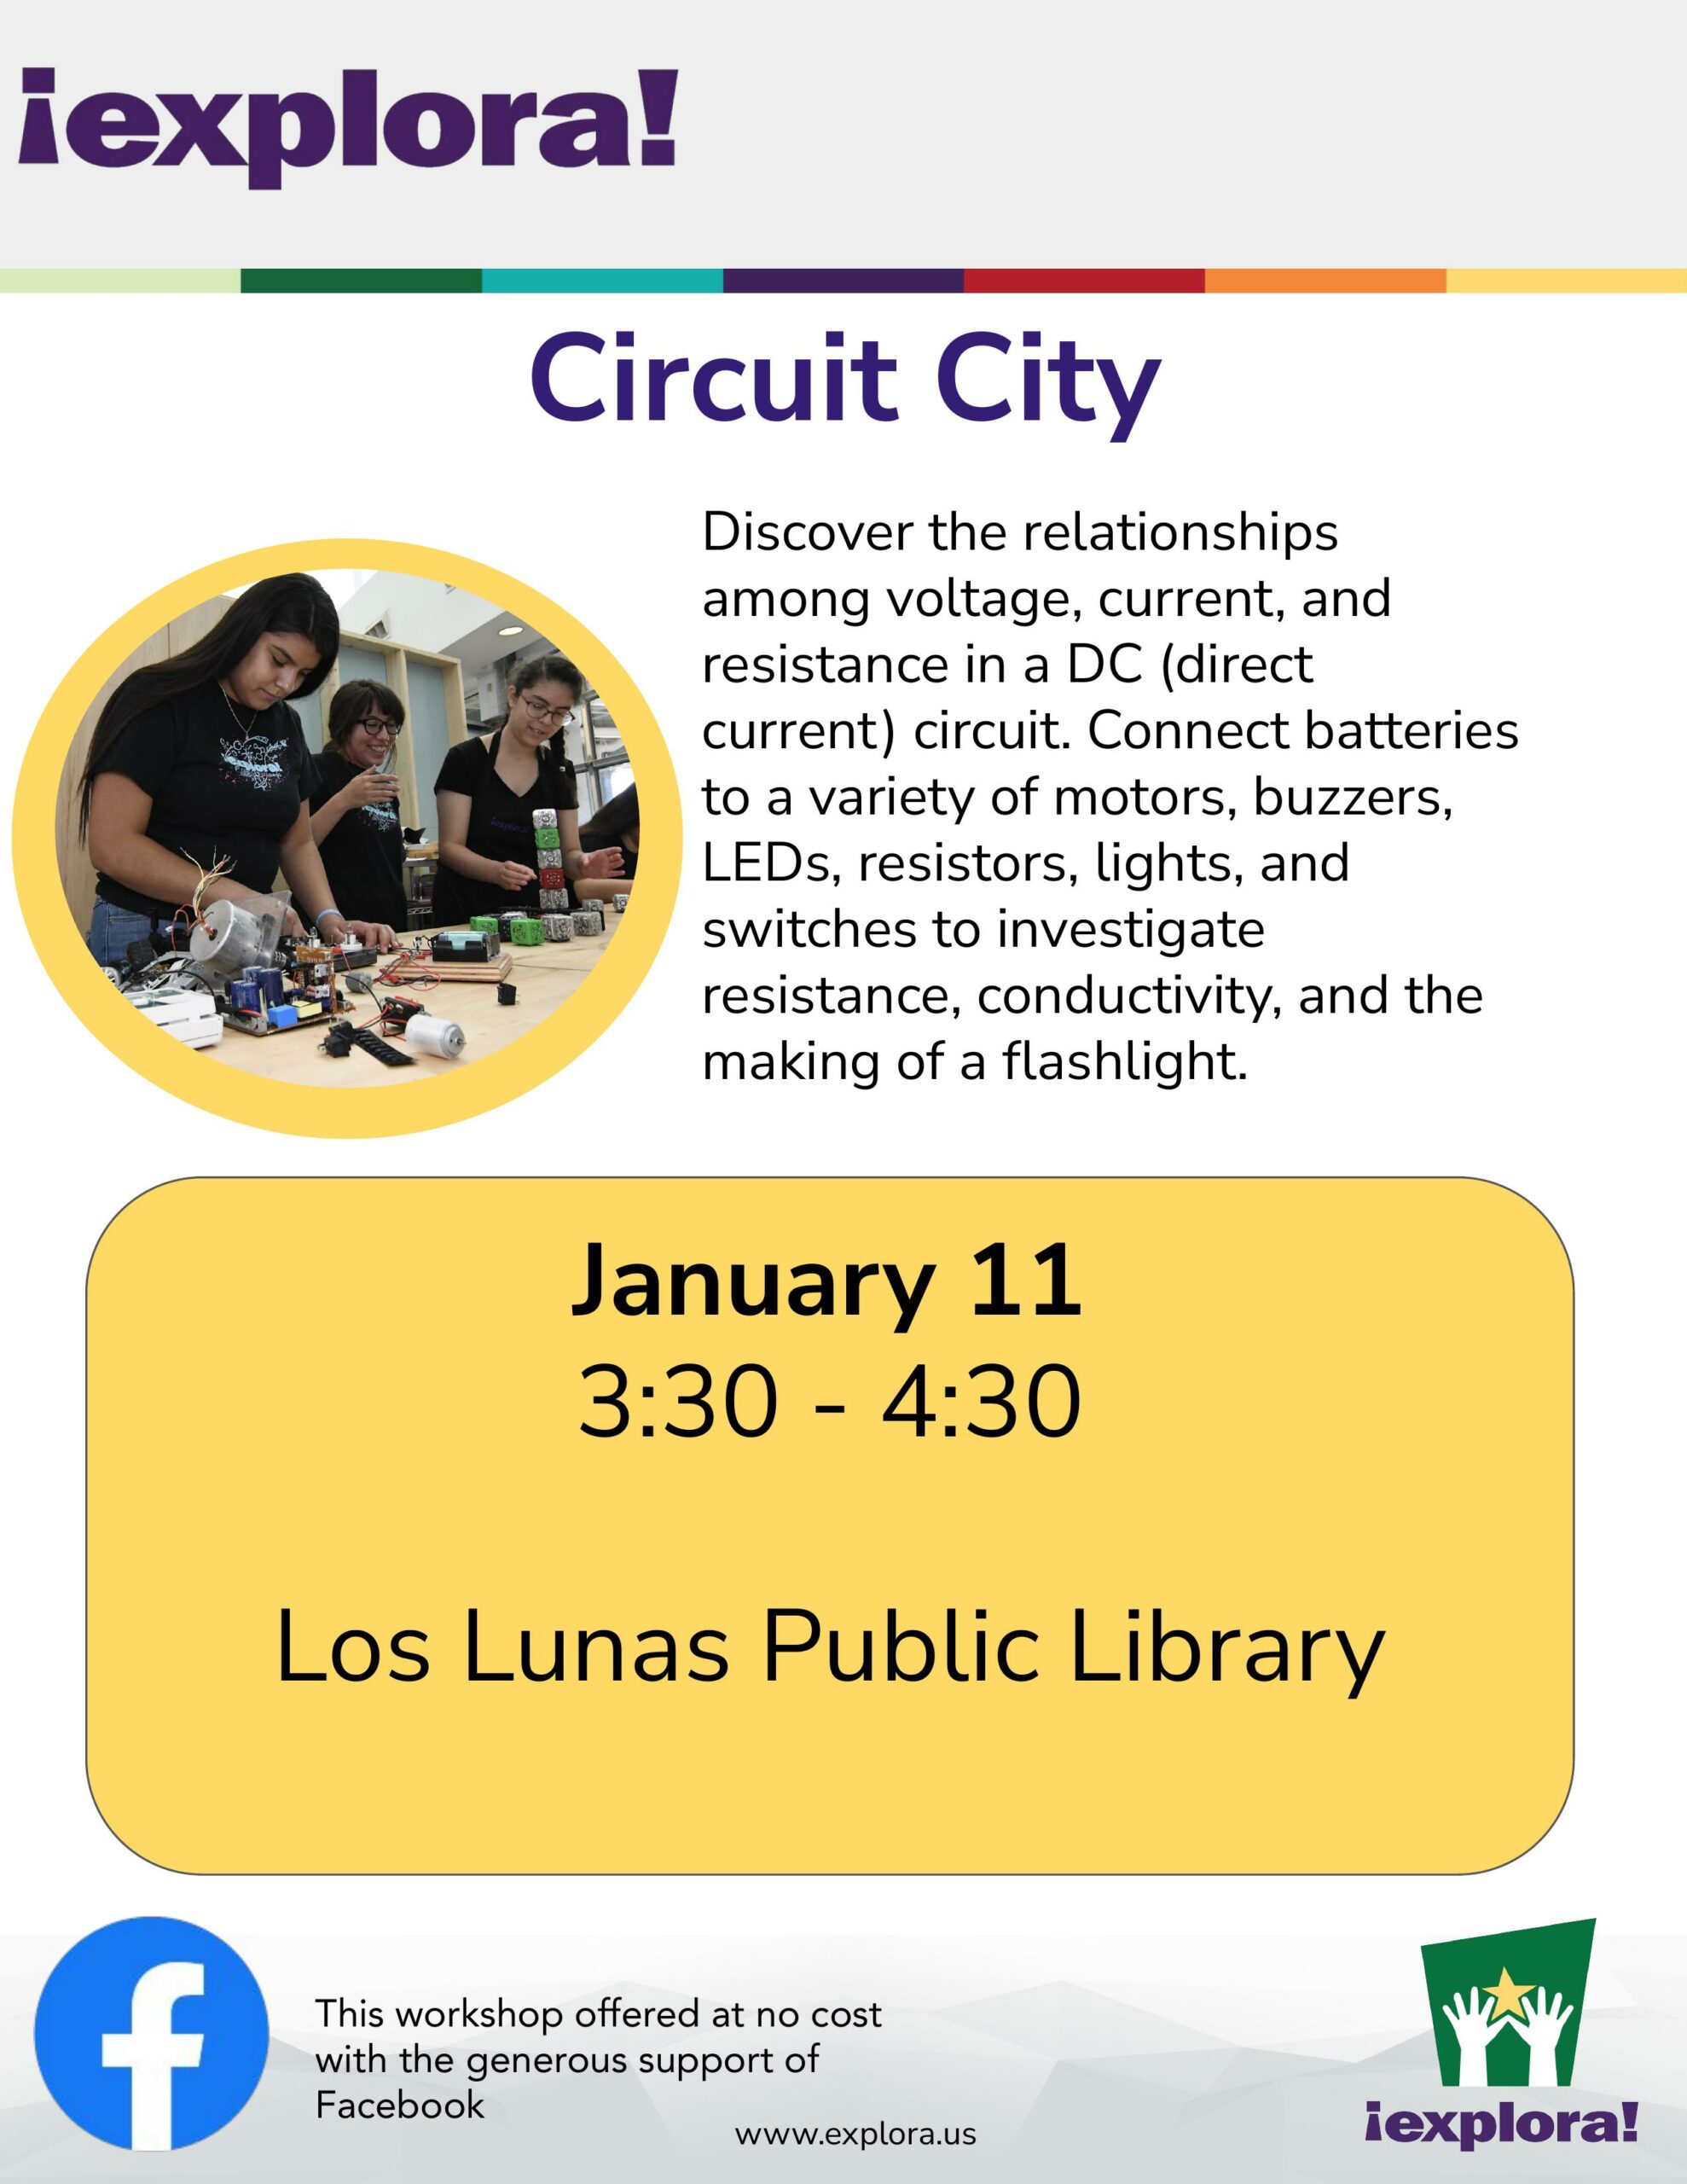 Circuit City event flyer